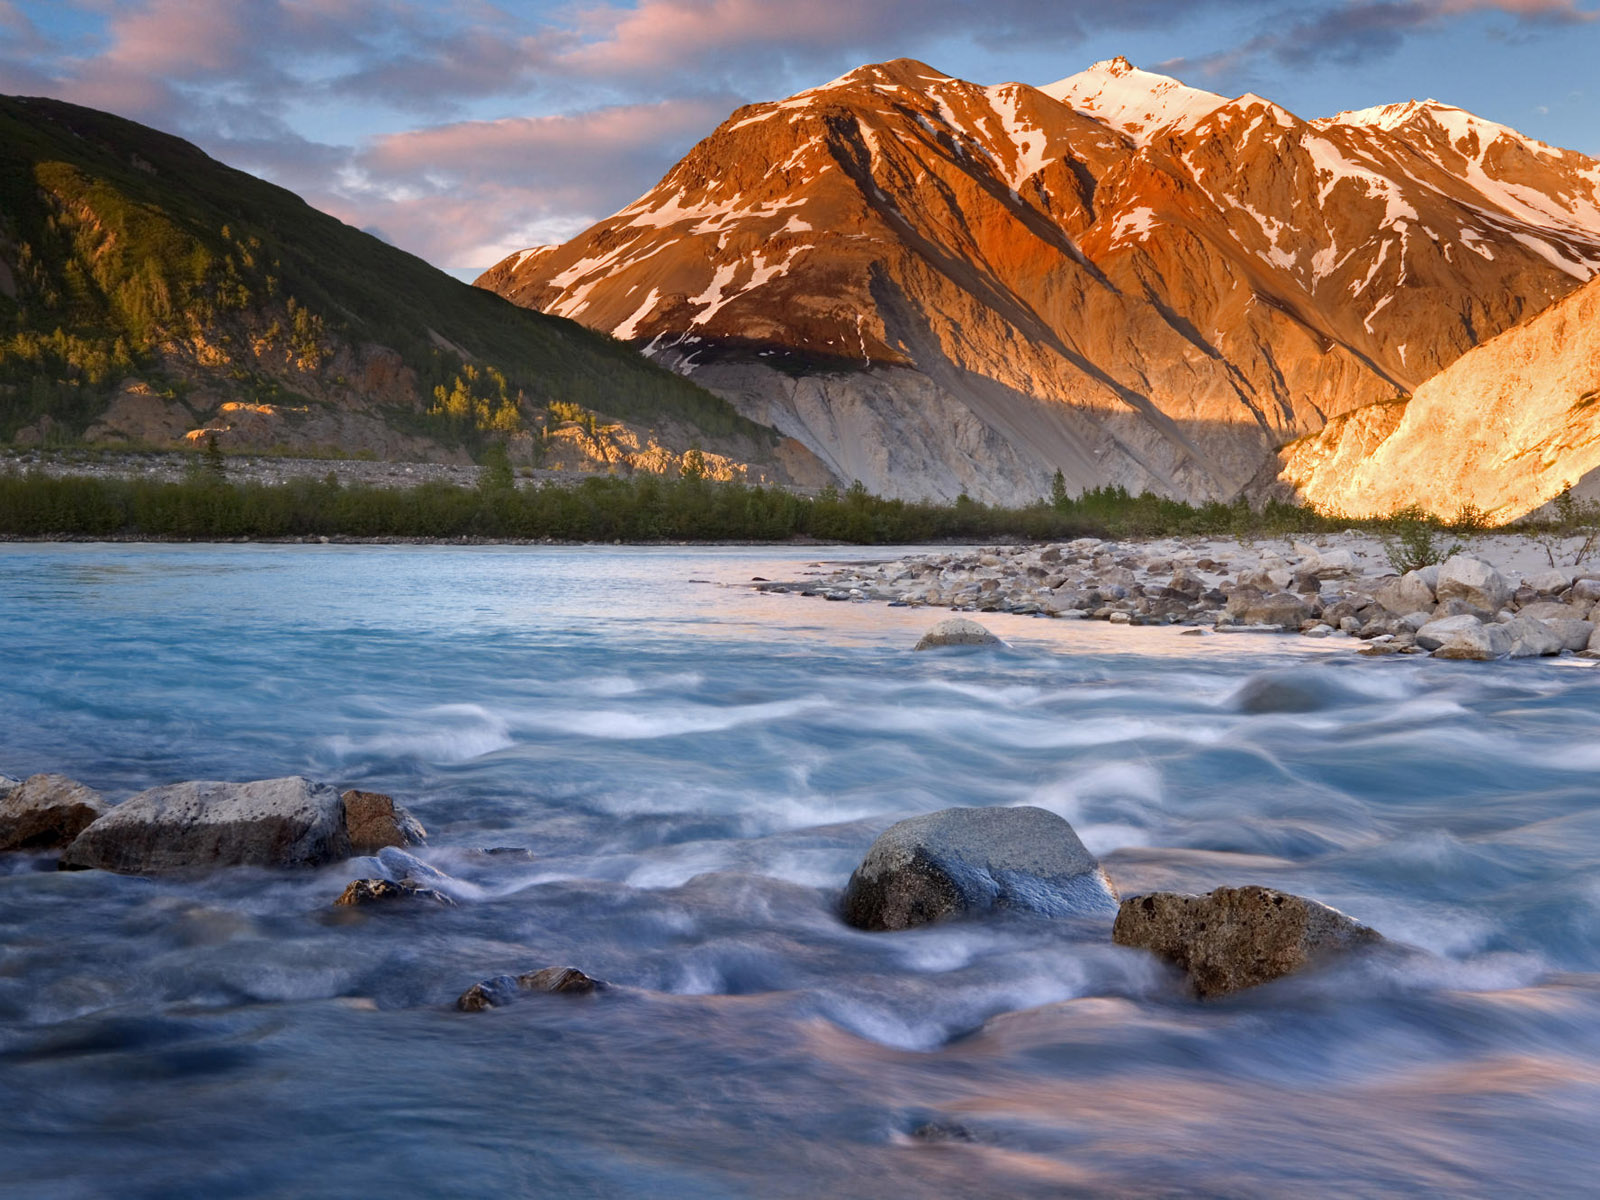 Alaskan river flowing with serene water.